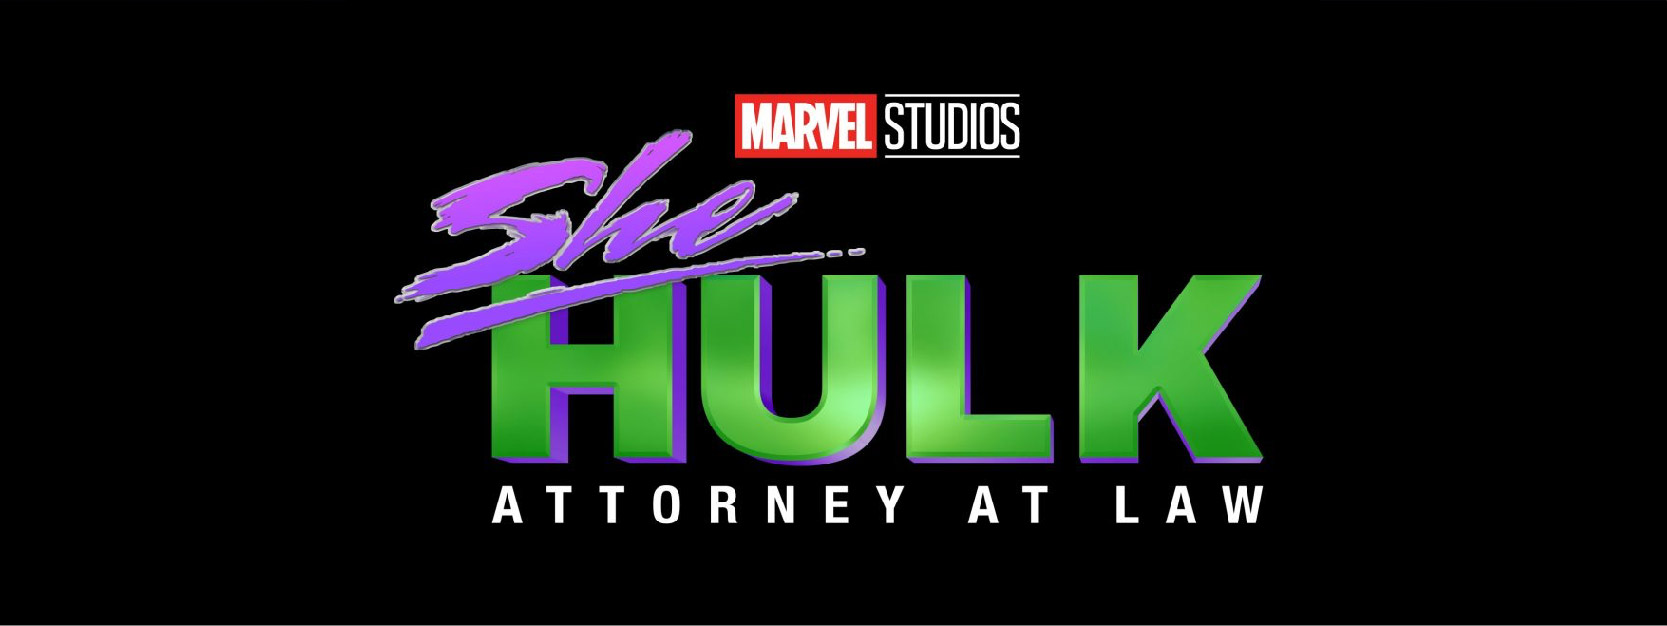 she-hulk-neuveritelna-pravnickabanner